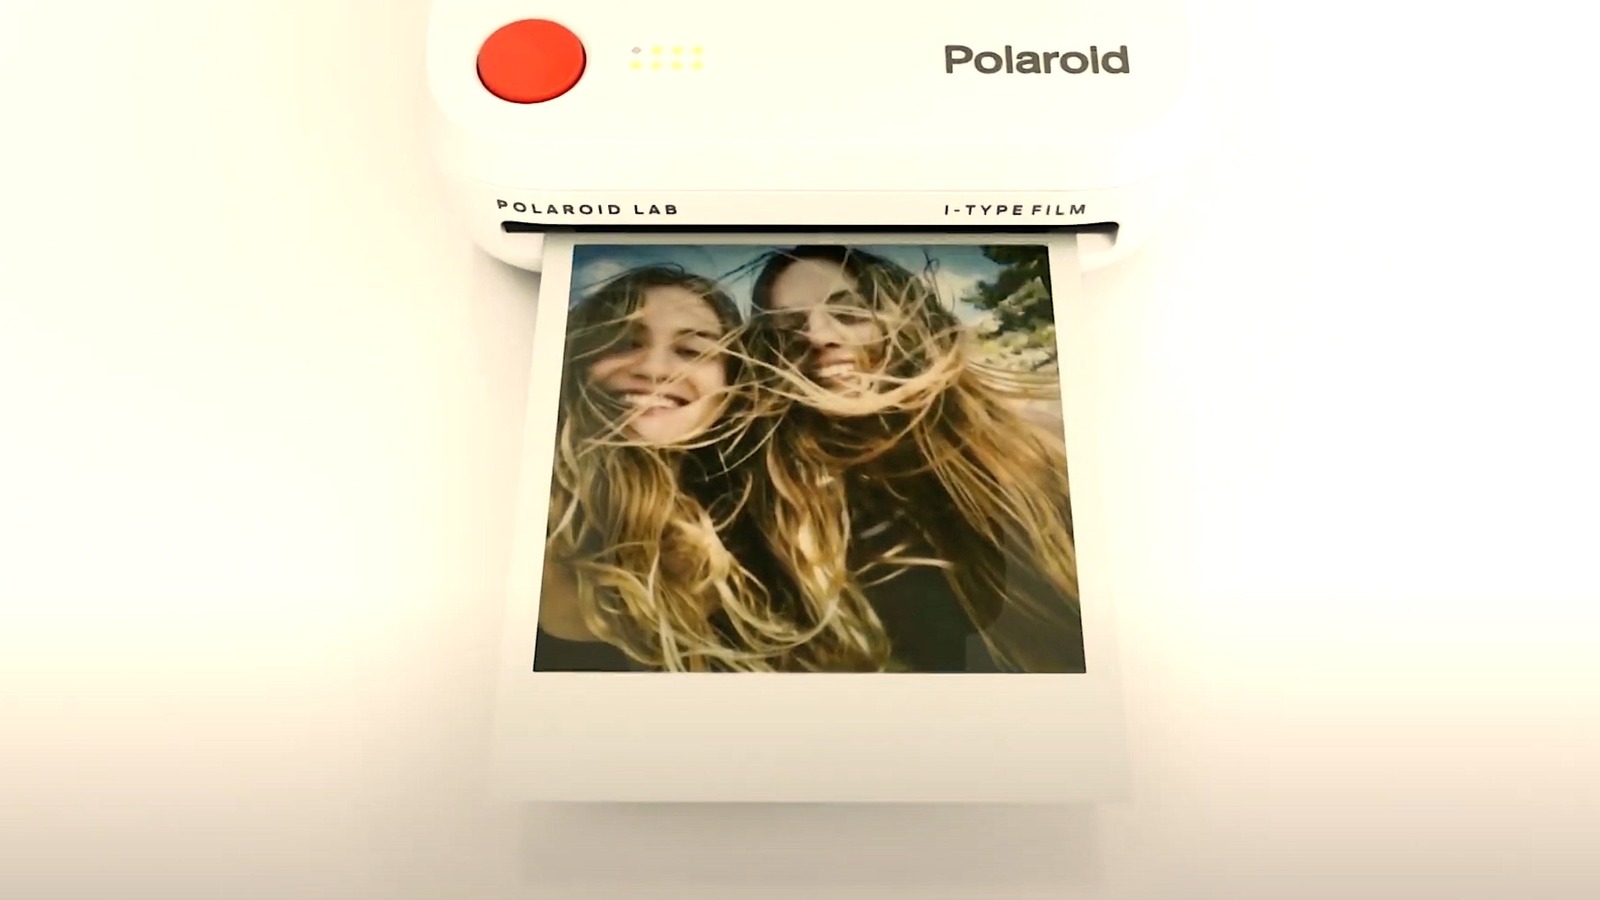 Polaroid Lab Review: Turn Your Smartphone Snaps Into Polaroid Prints